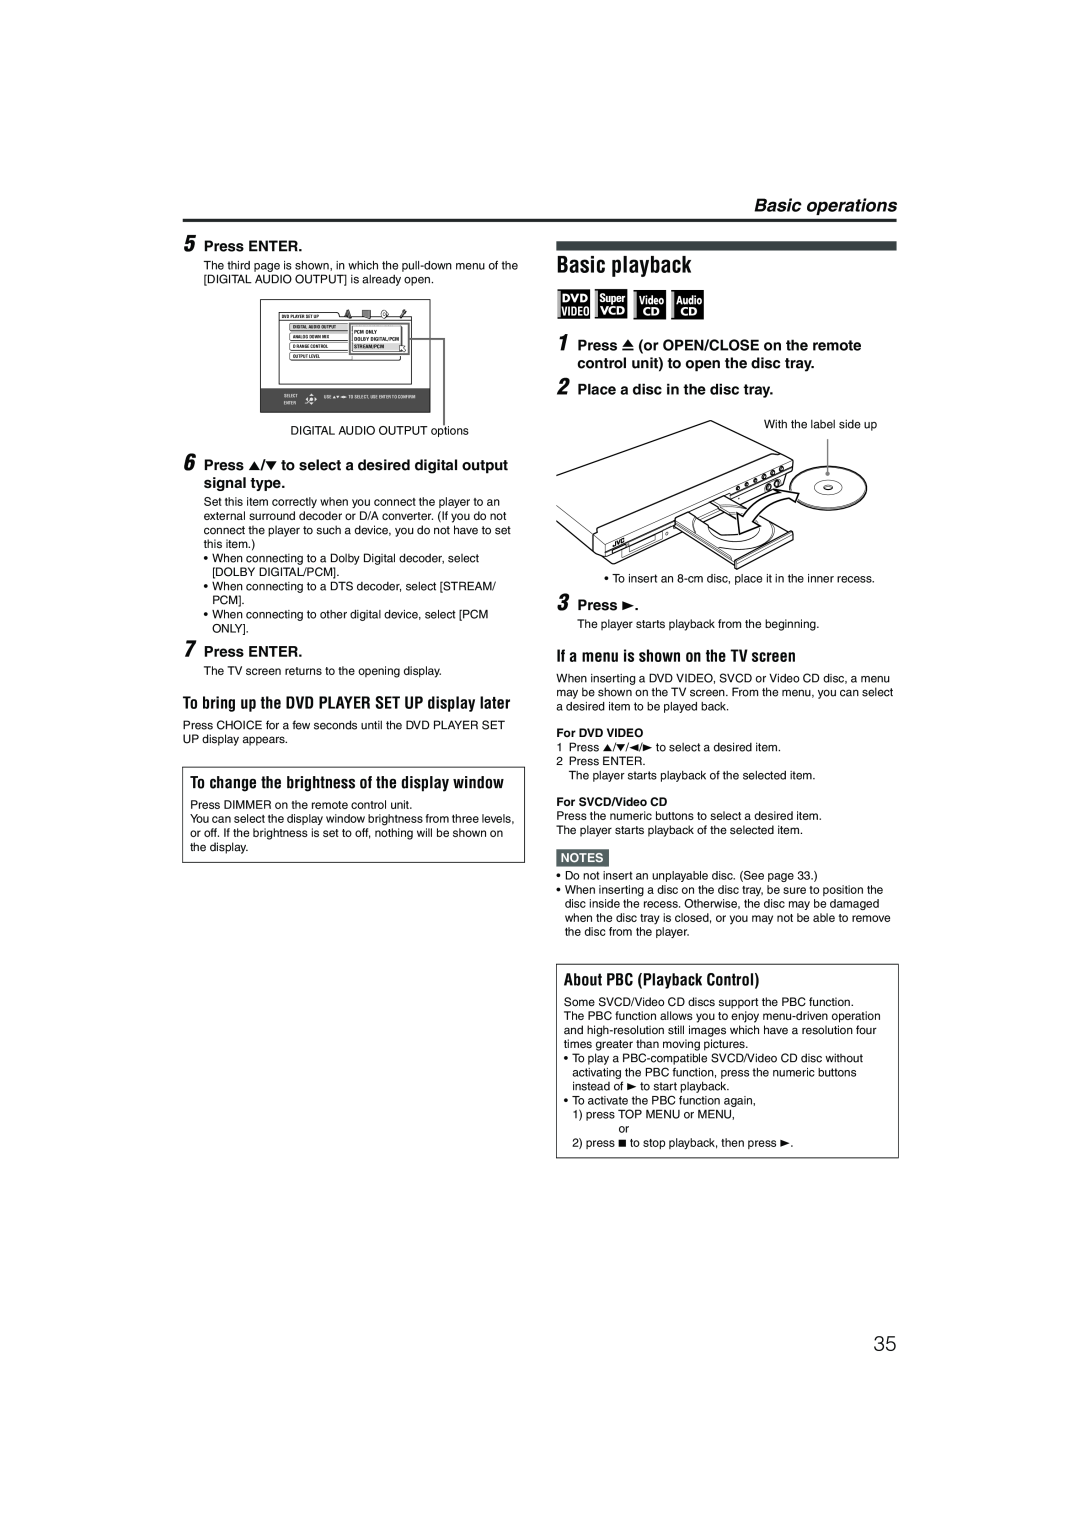 JVC LVT1002-012B manual Basic playback, If a menu is shown on the TV screen, About PBC Playback Control, Press ENTER 